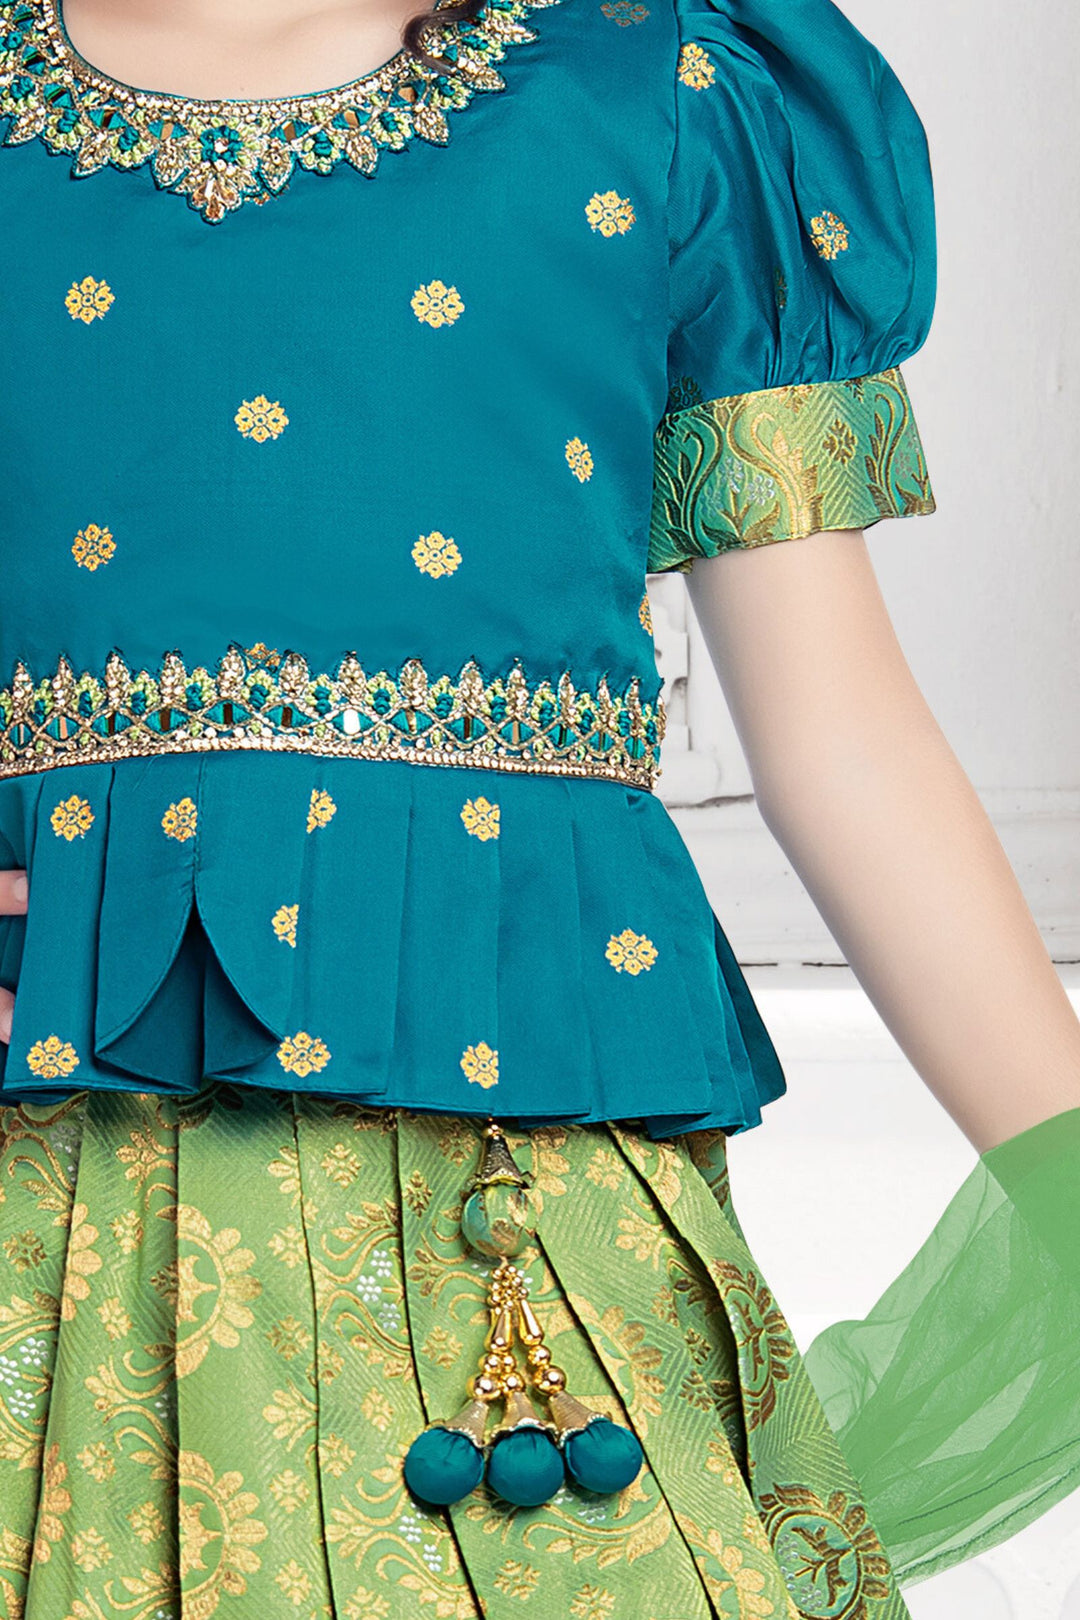 Rama Blue with Green Banaras, Stone, Beads and Thread work Lehenga Choli for Girls